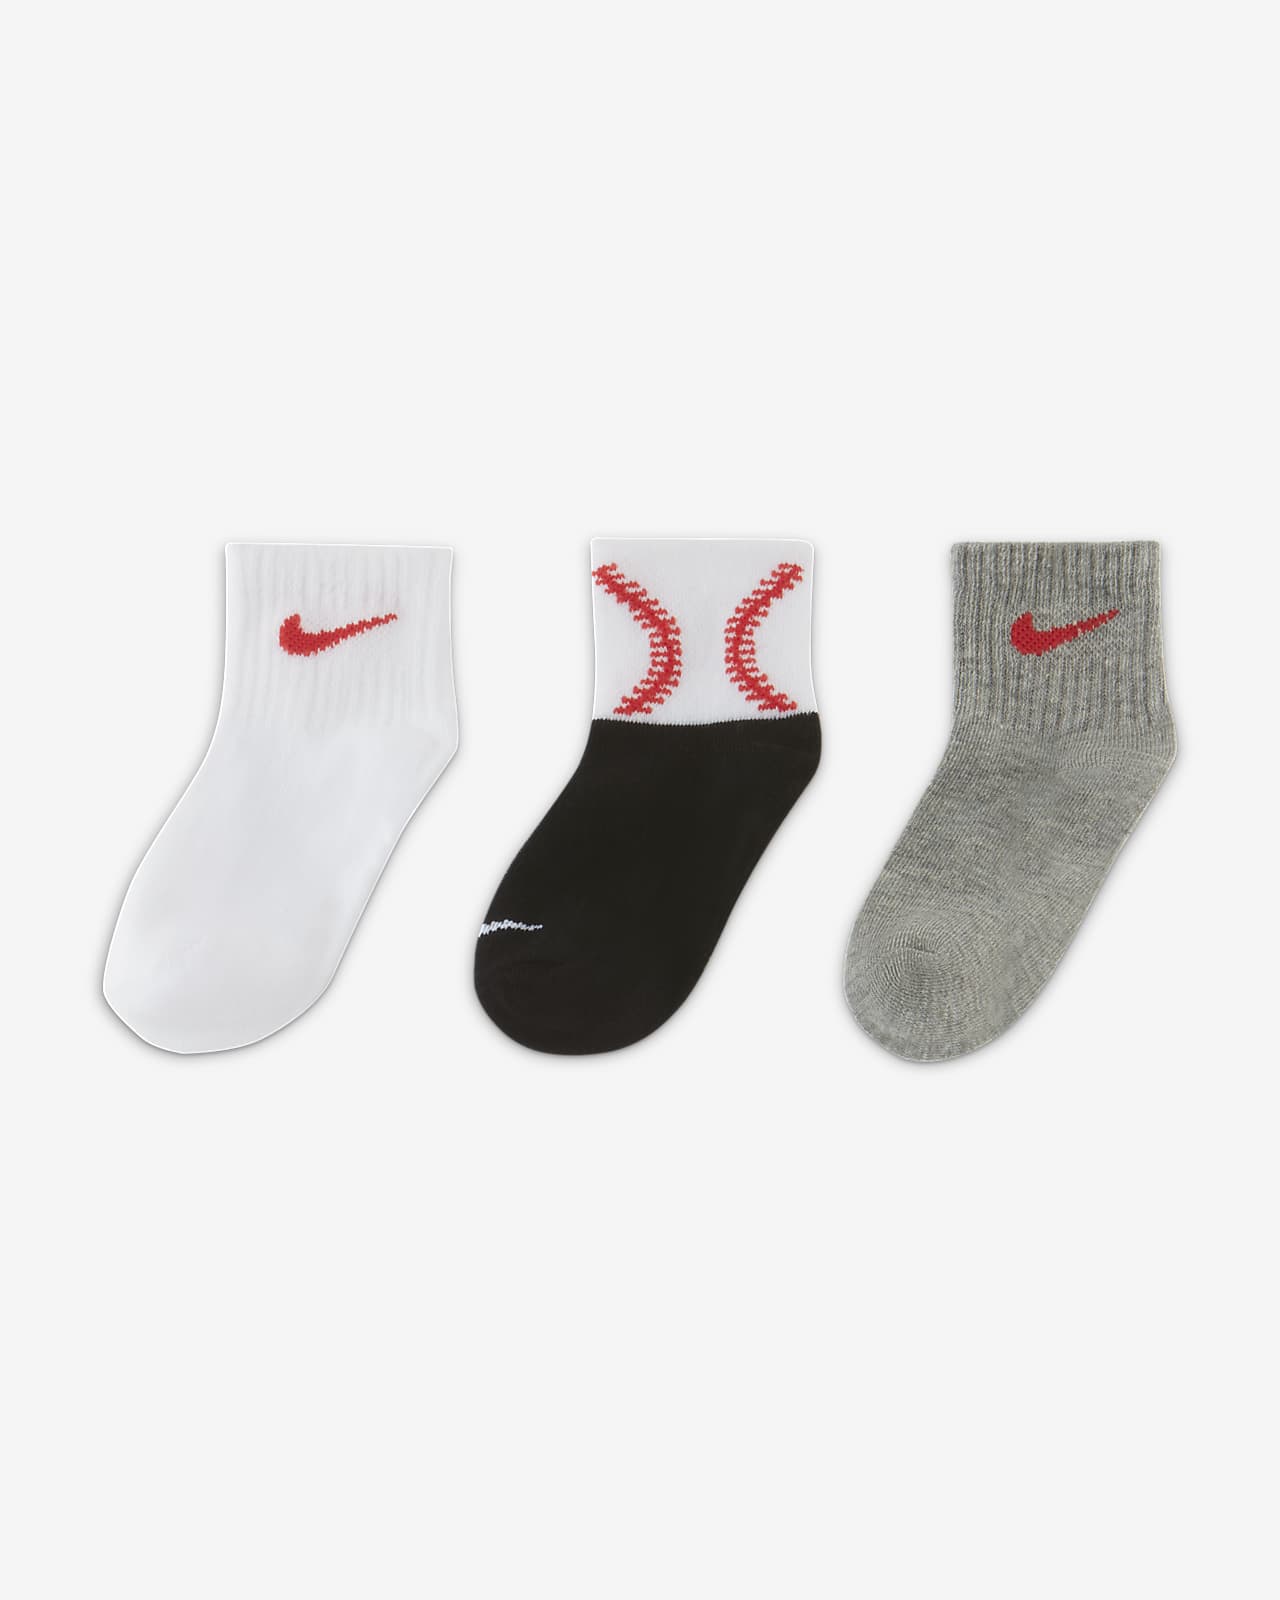 Nike Little Kids' Gripper Ankle Socks (3 Pairs). Nike.com